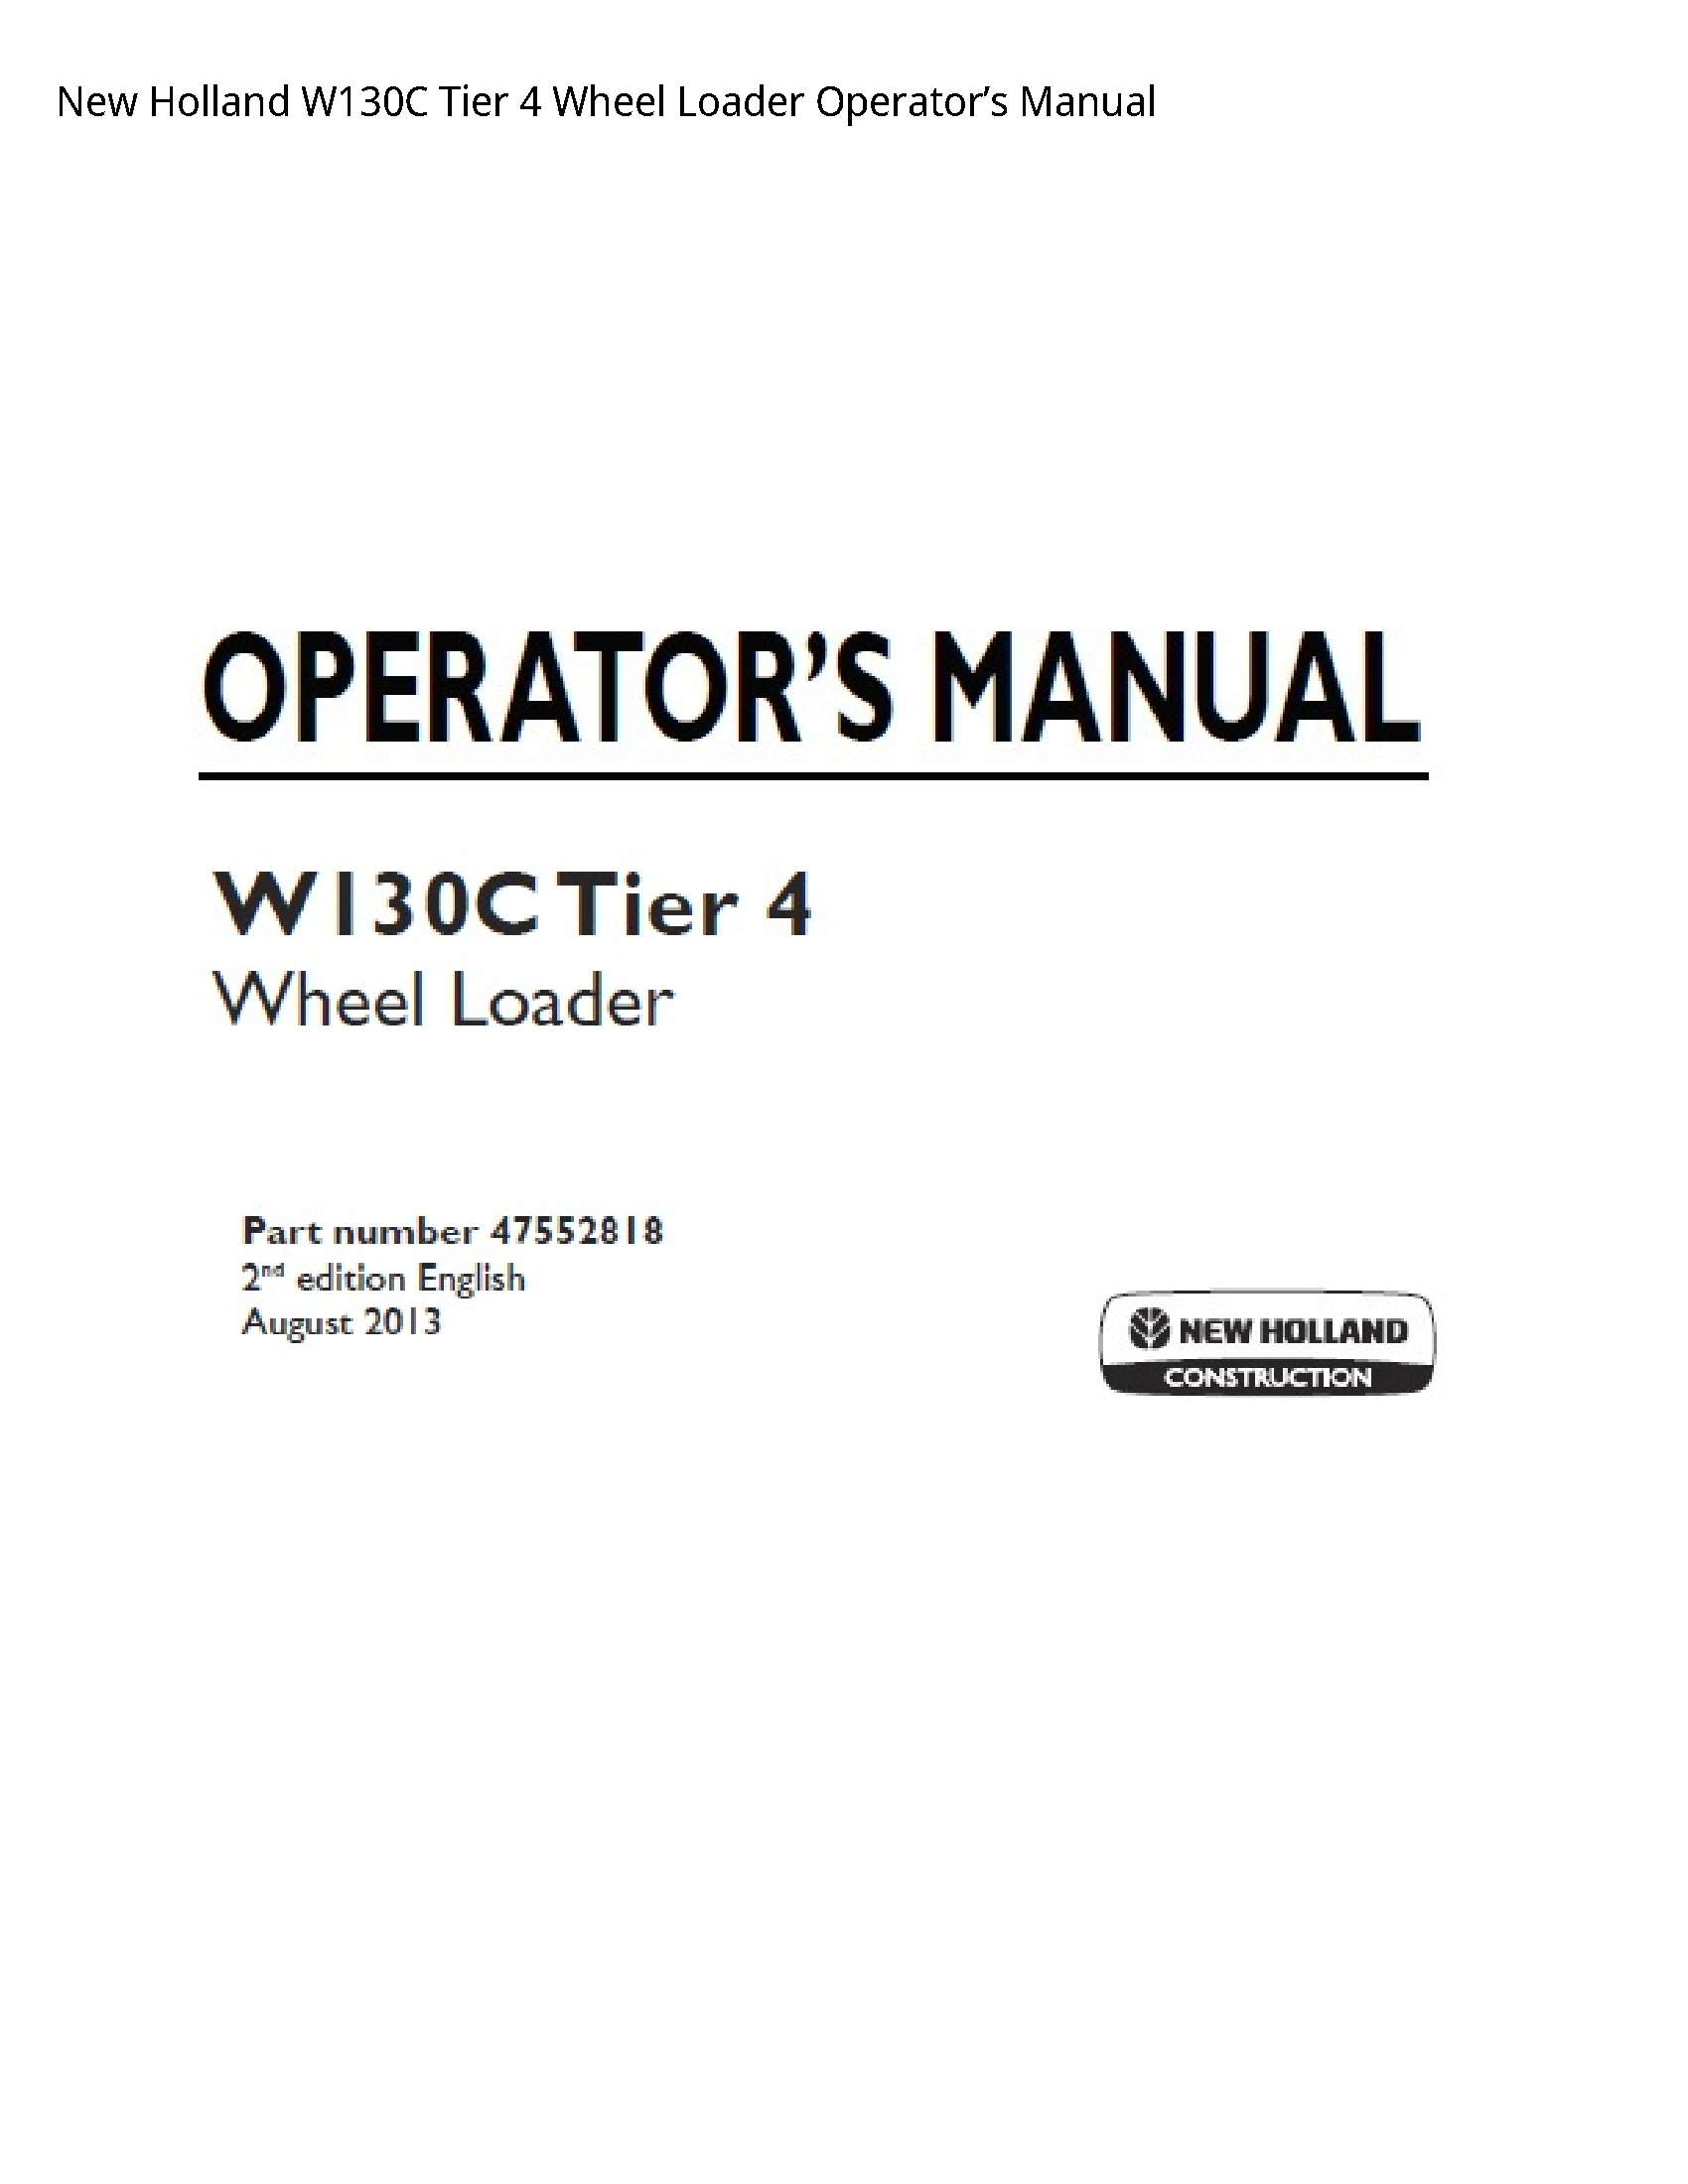 New Holland W130C Tier Wheel Loader Operator’s manual